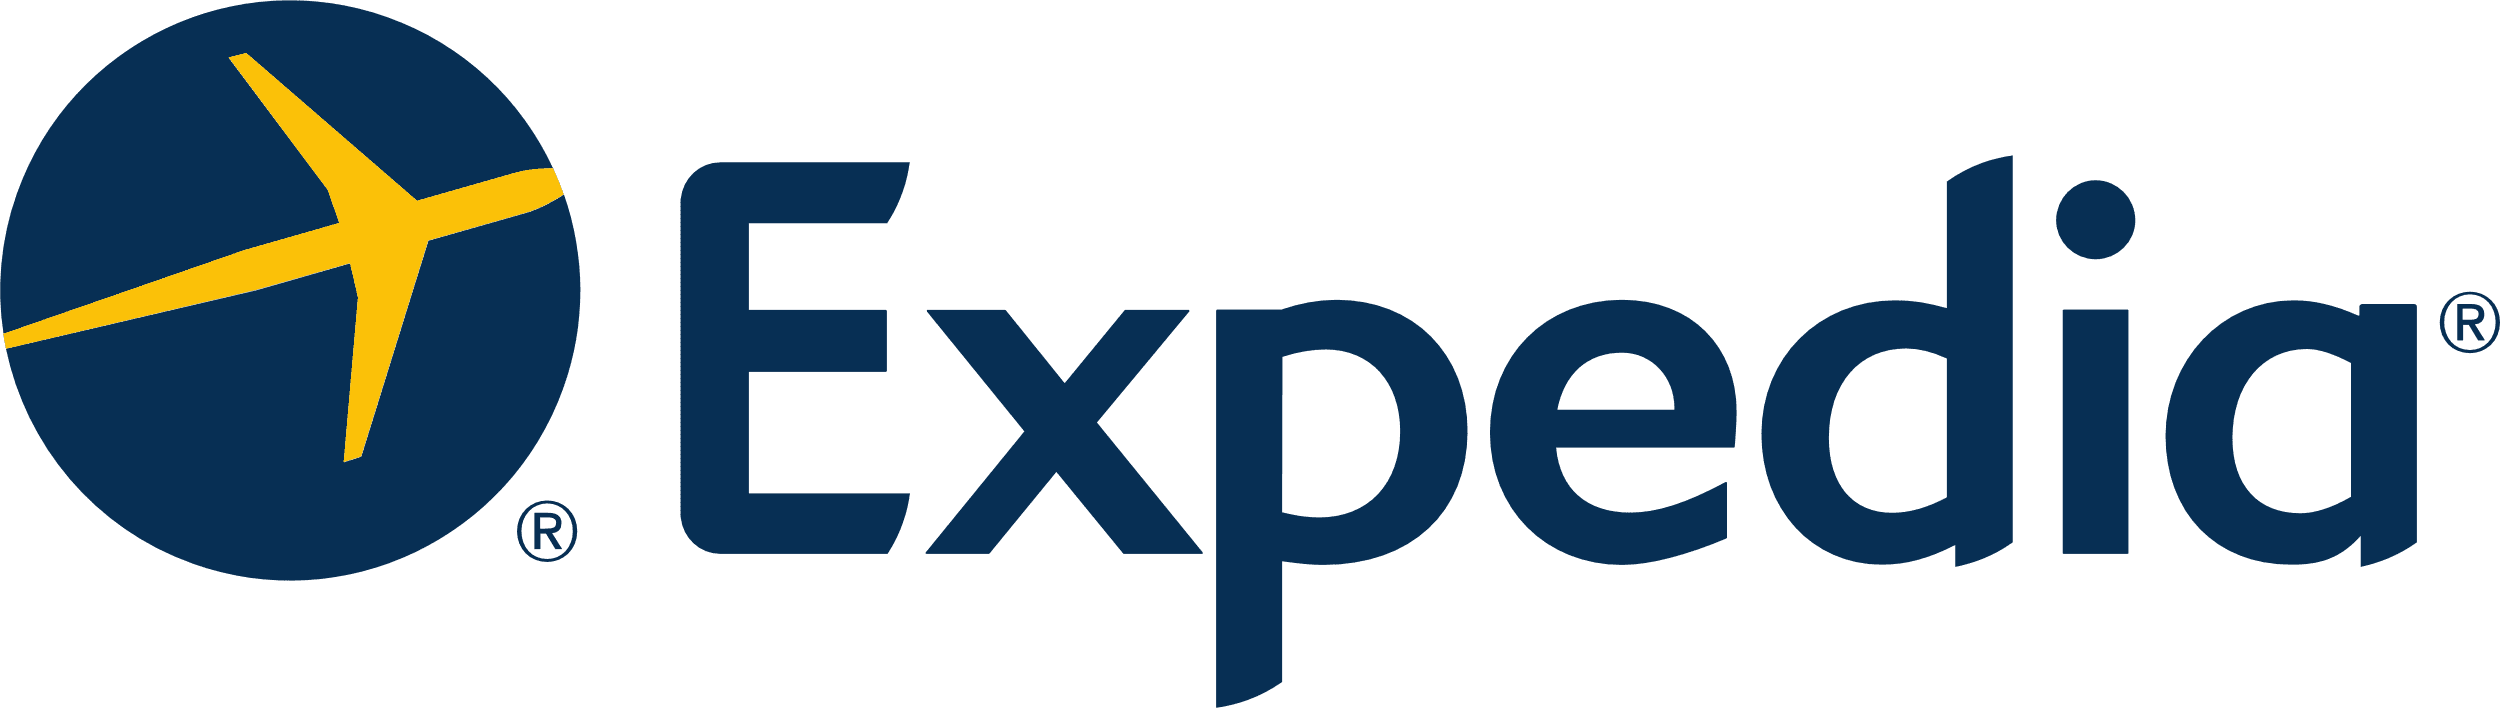 Expedia-logo-1